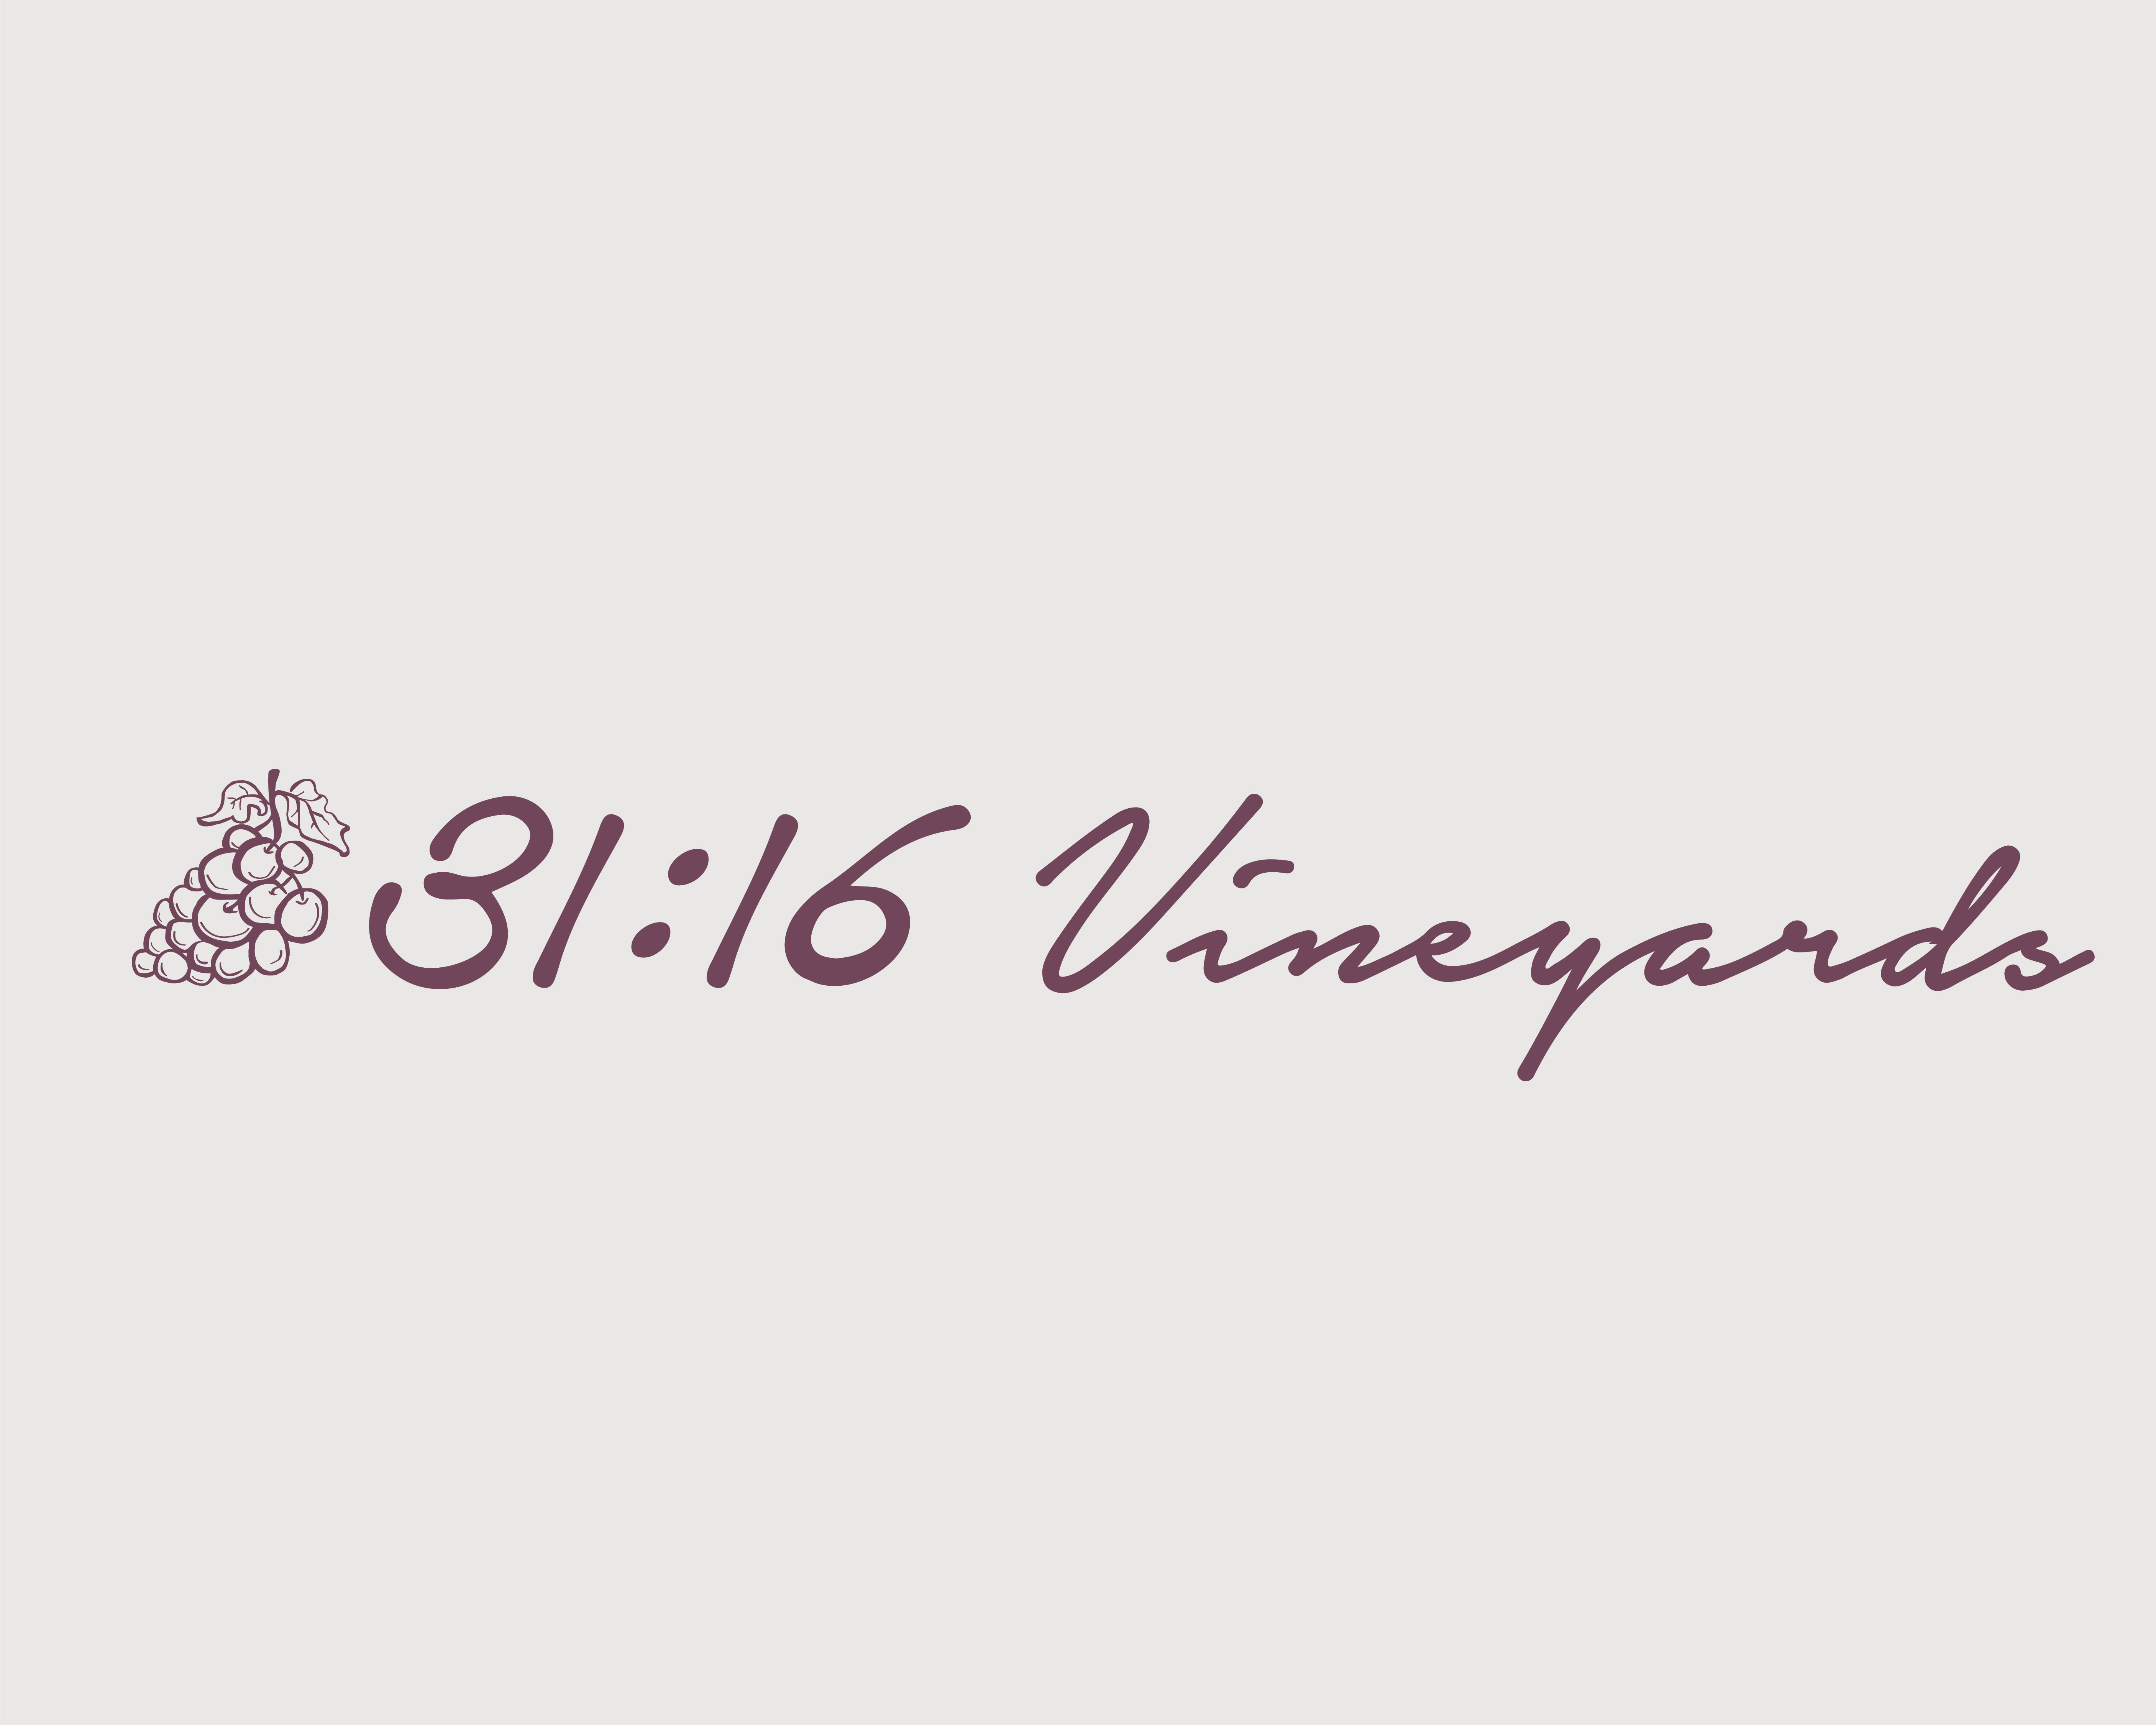 31:16 Vineyards